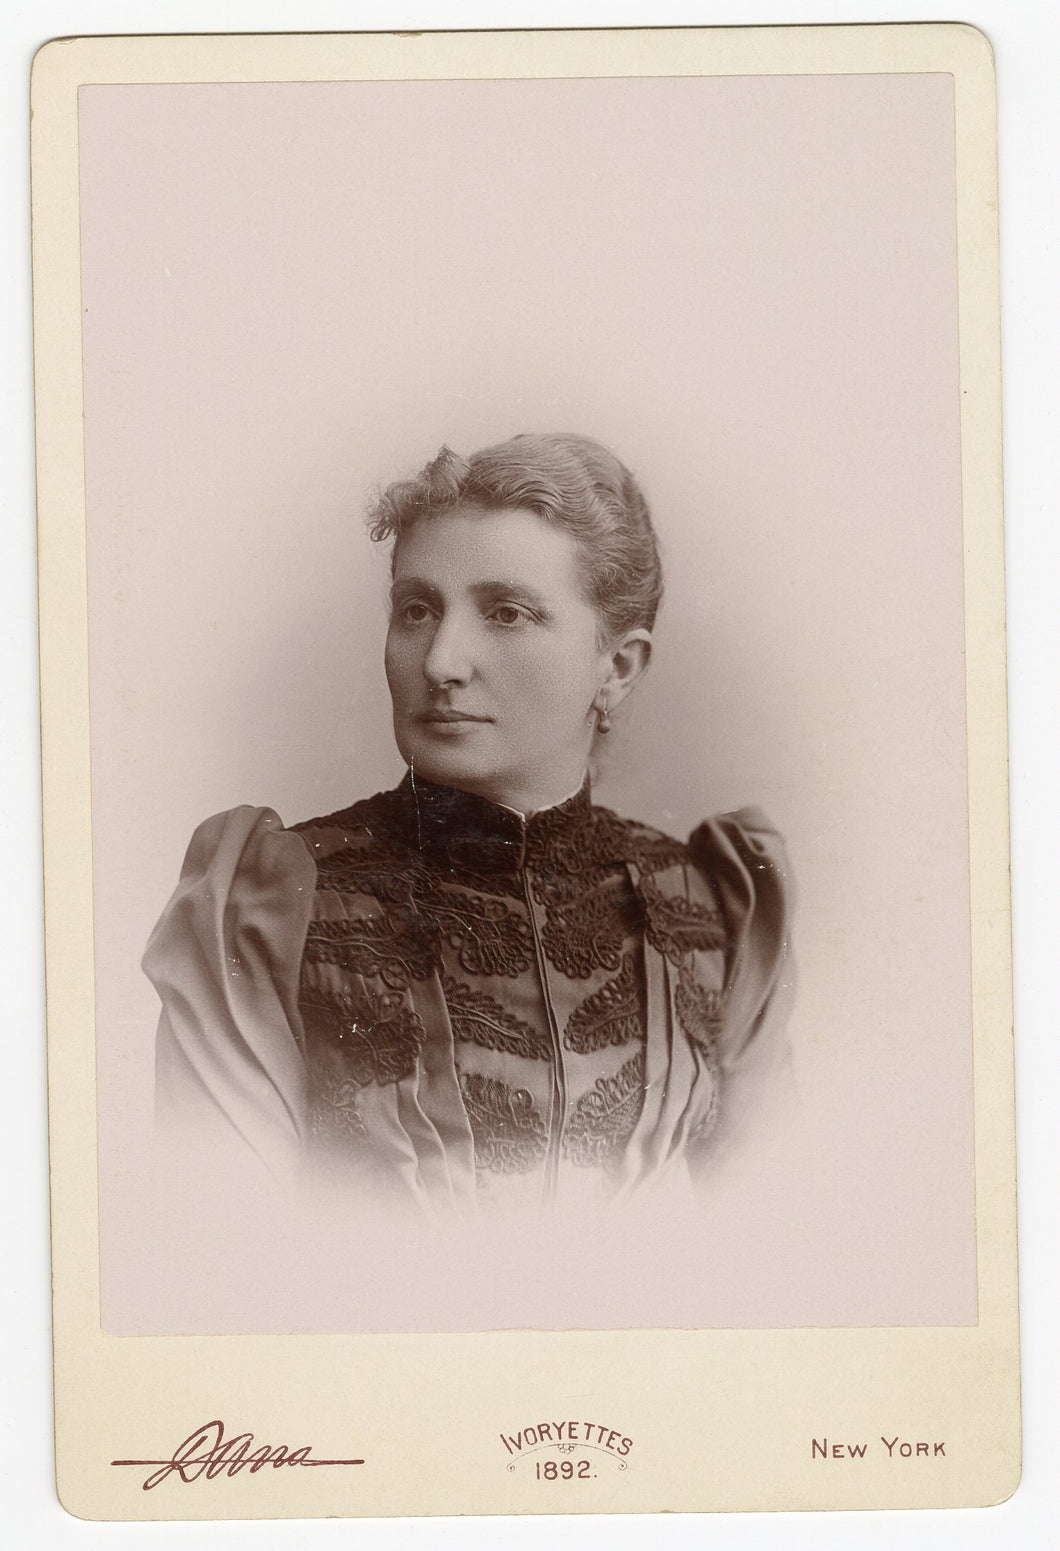 Victorian CABINET CARD, New York, New York, Dana || Ivoryettes Woman's Portrait